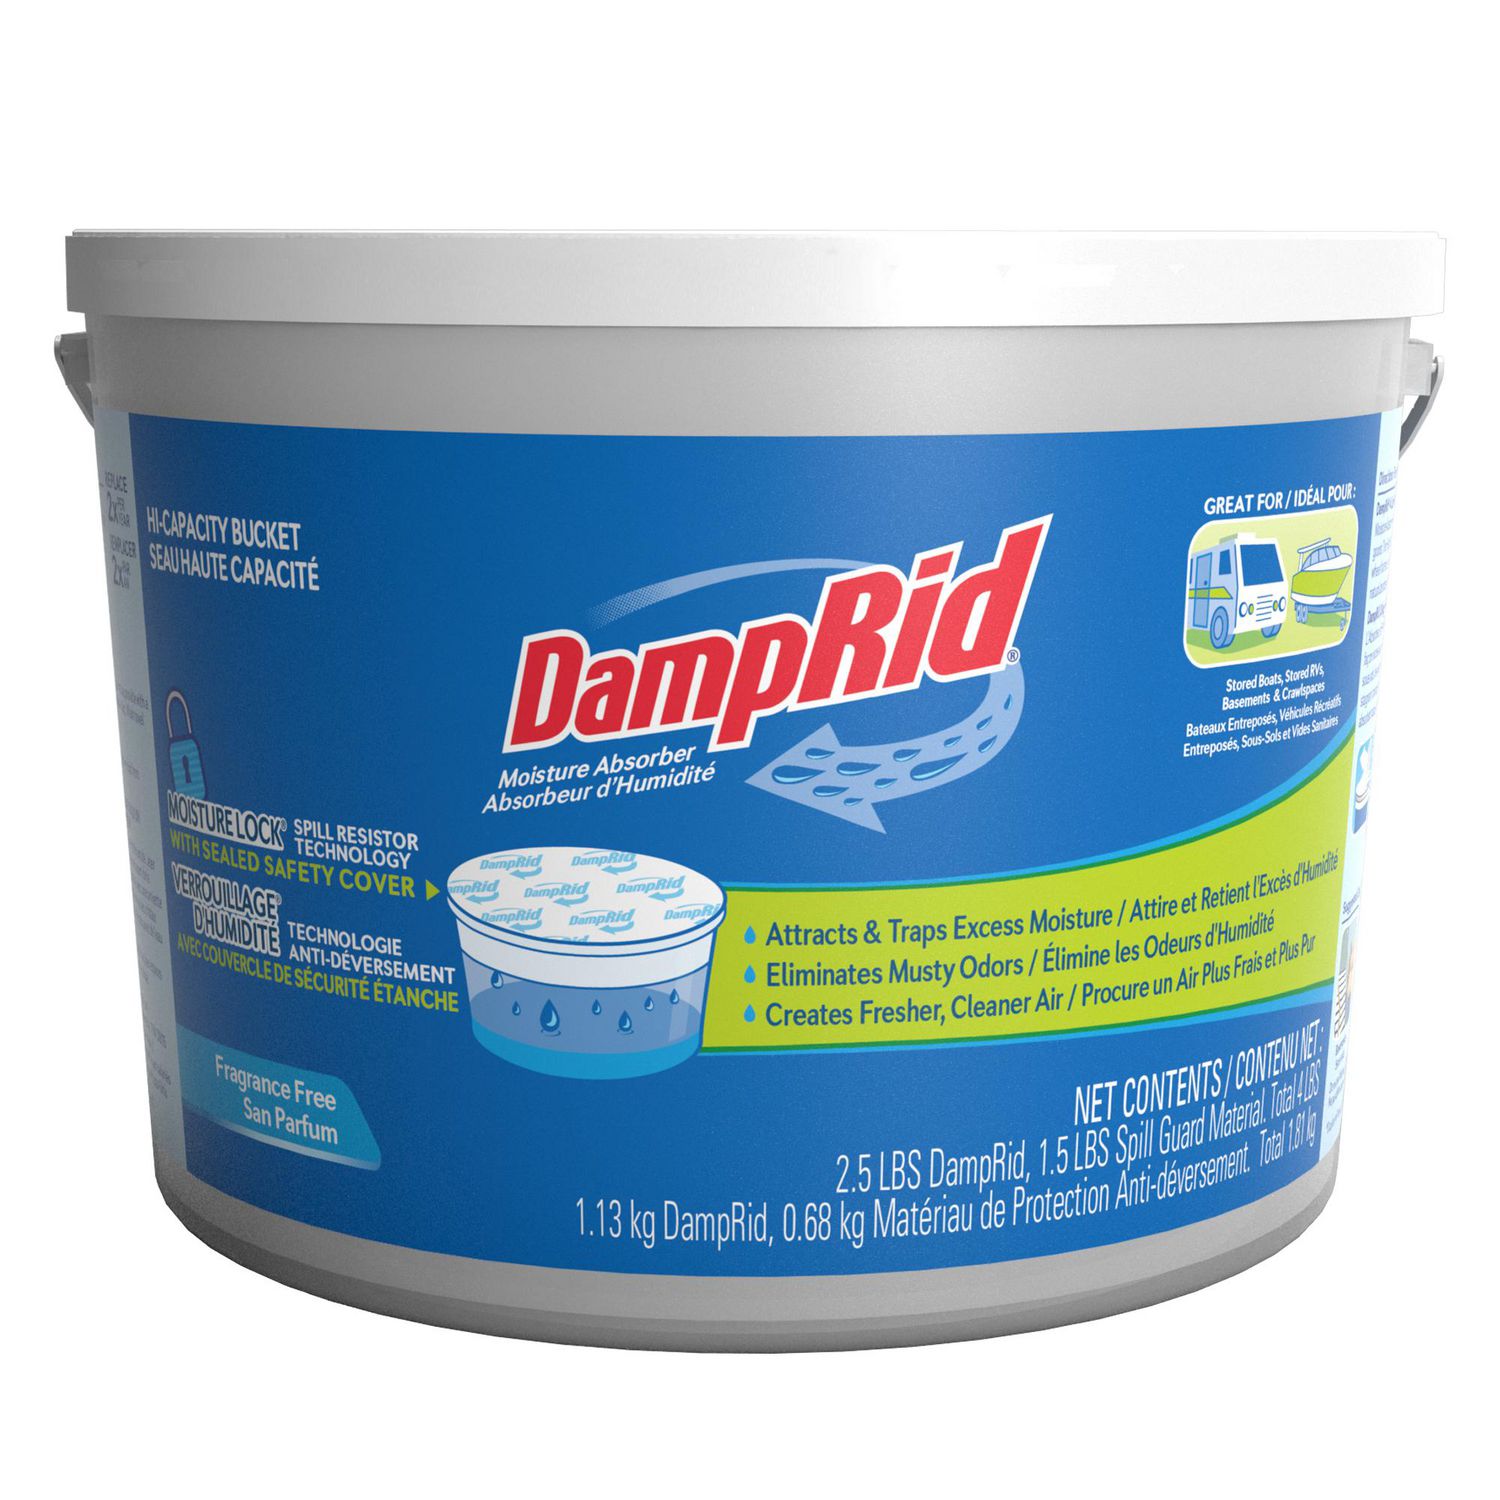 DampRid Hi-Capacity Moisture Absorbers FRAGRANCE FREE - 4 lb. Tub